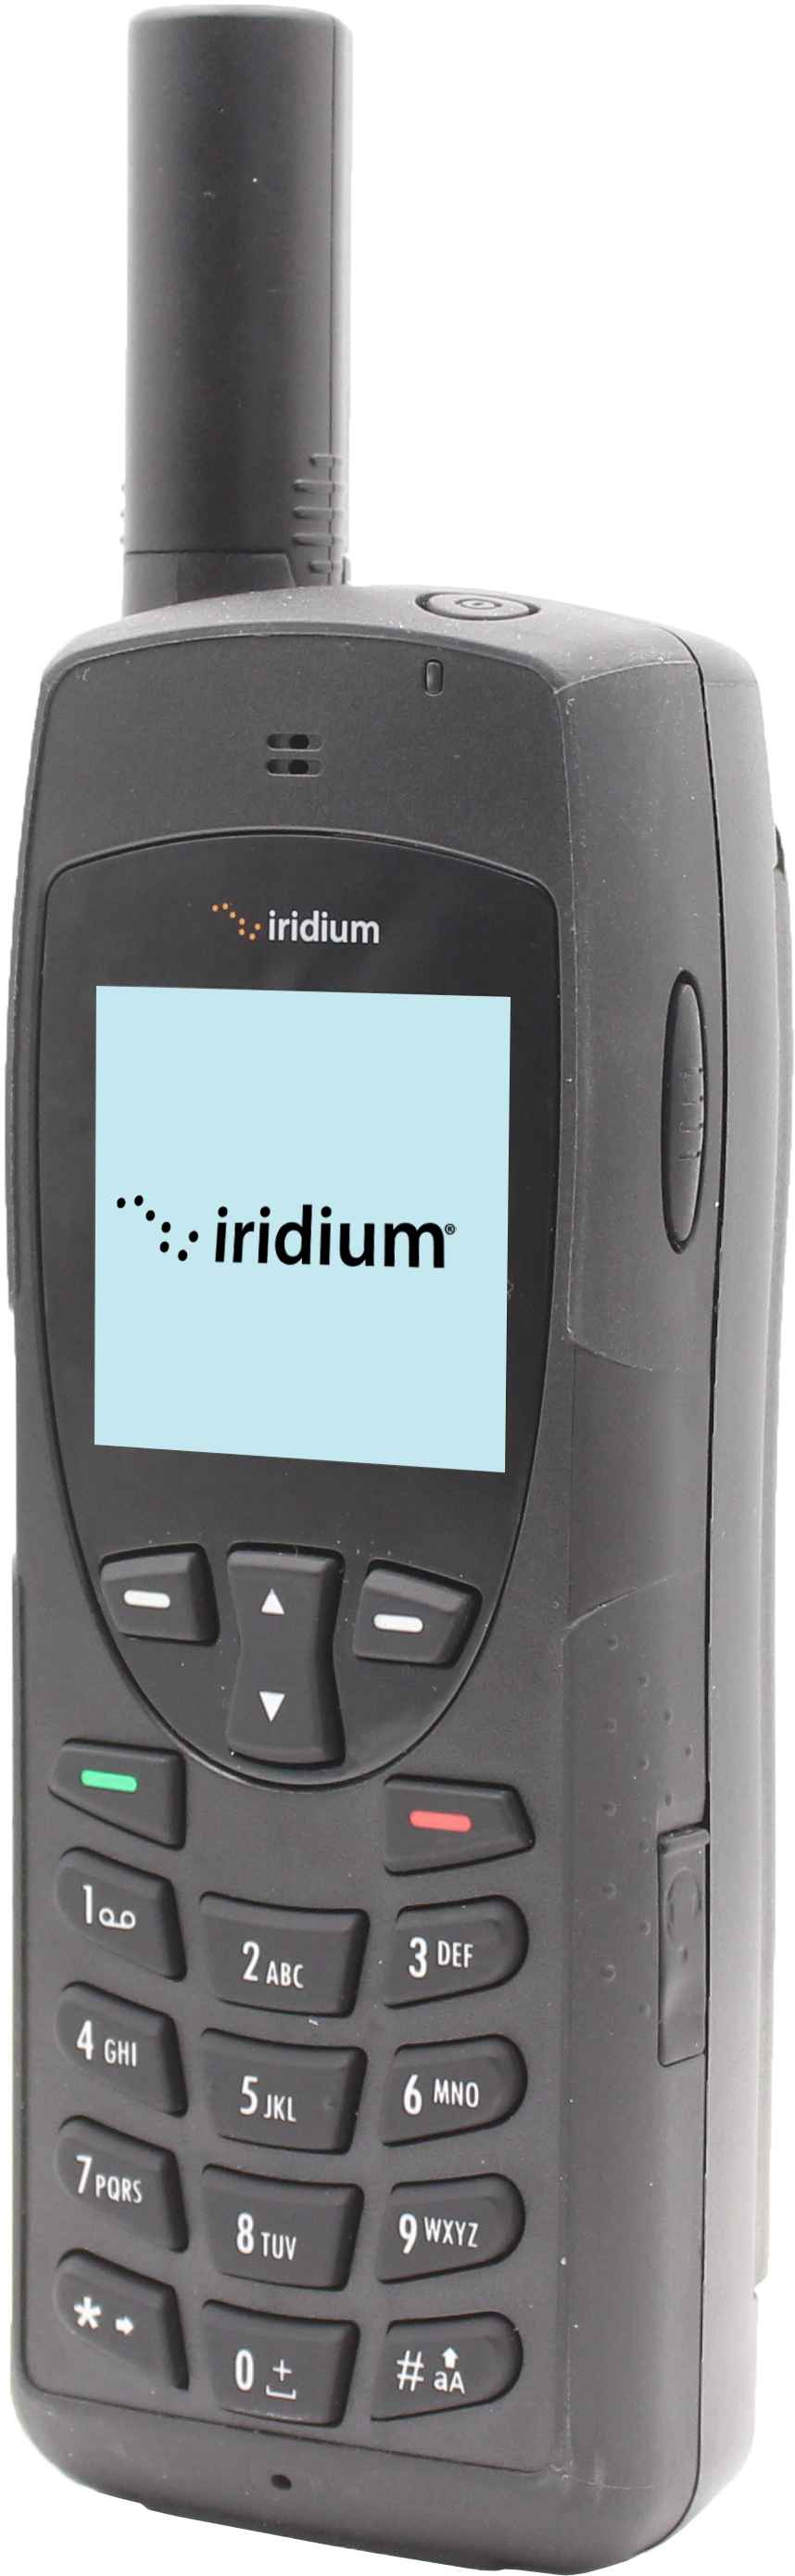 Pack Iridium 9555 con tarjeta SIM Prepago